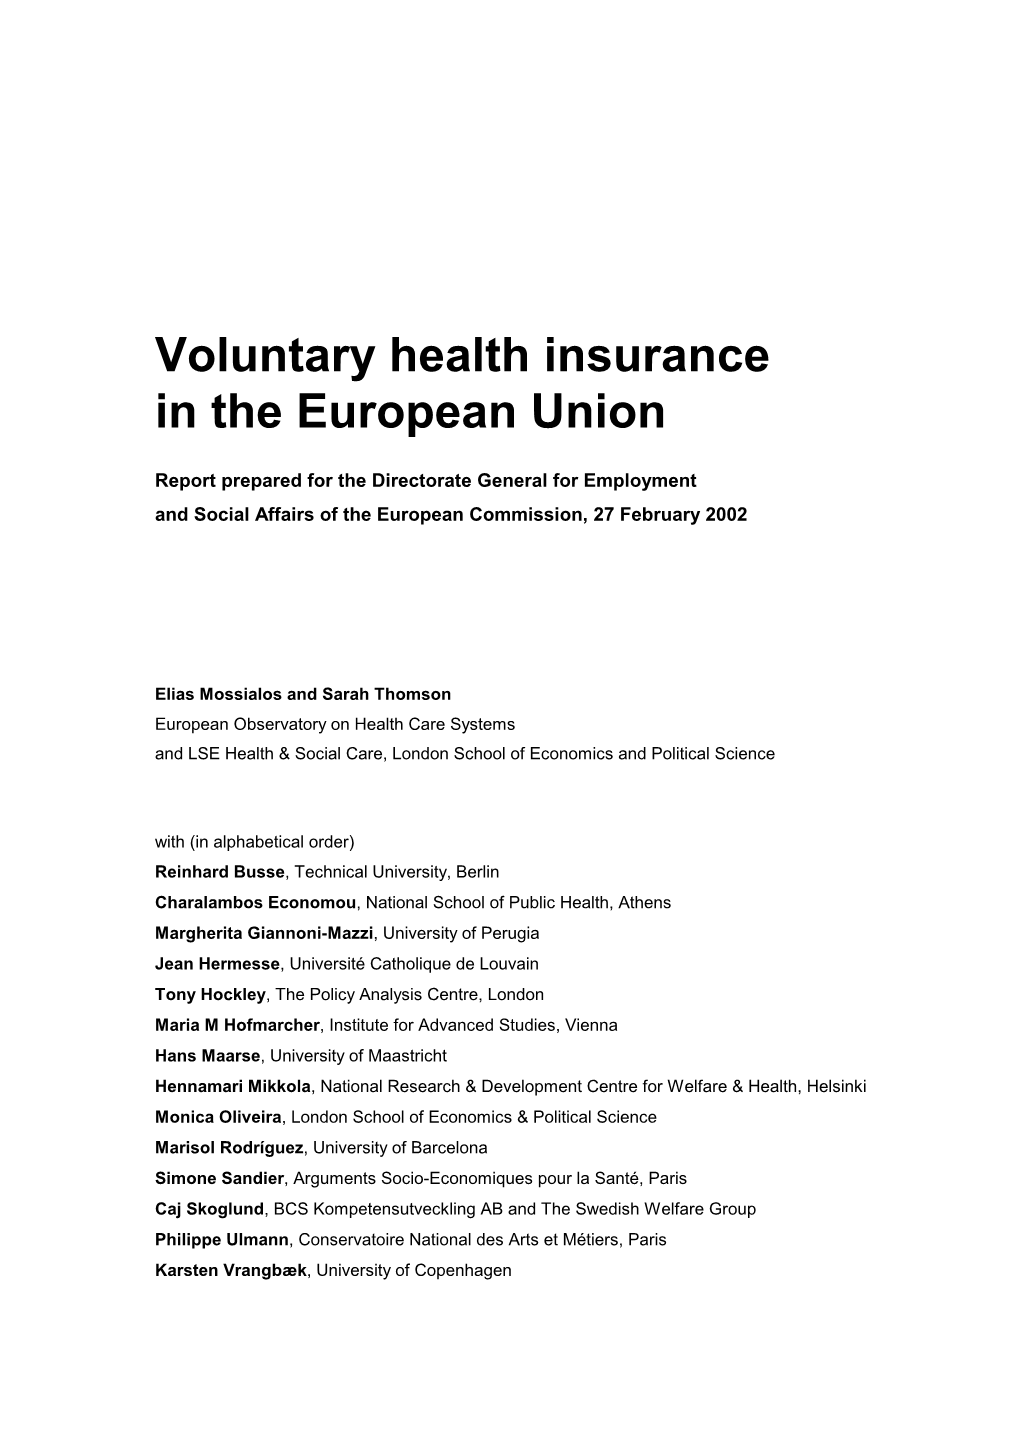 Voluntary Health Insurance in the European Union